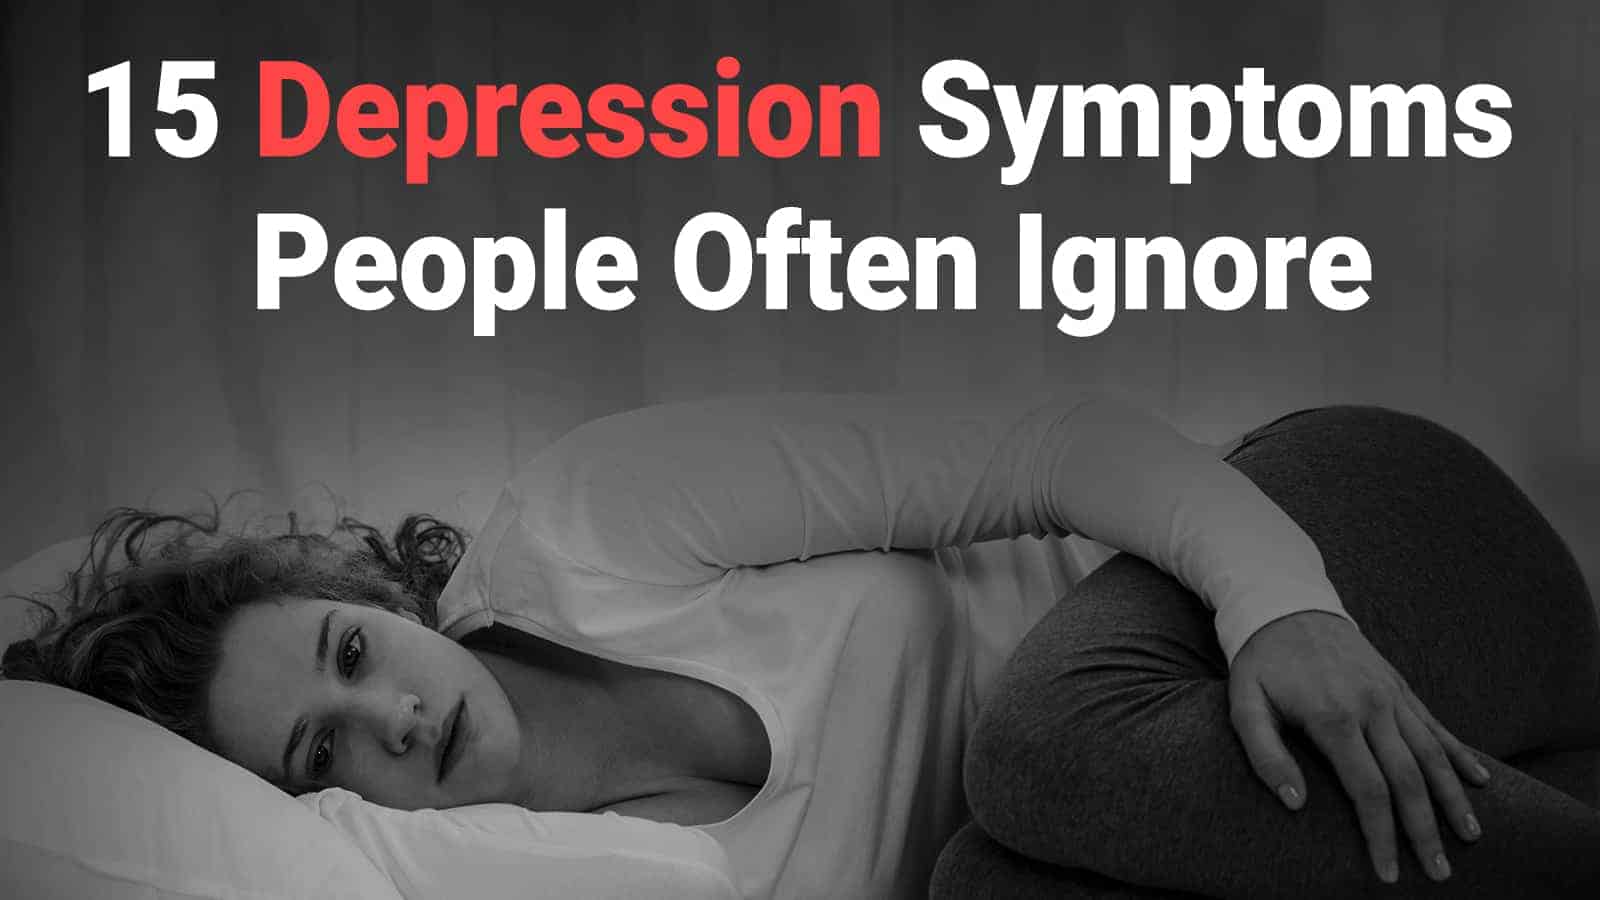 15 Depression Symptoms People Often Ignore